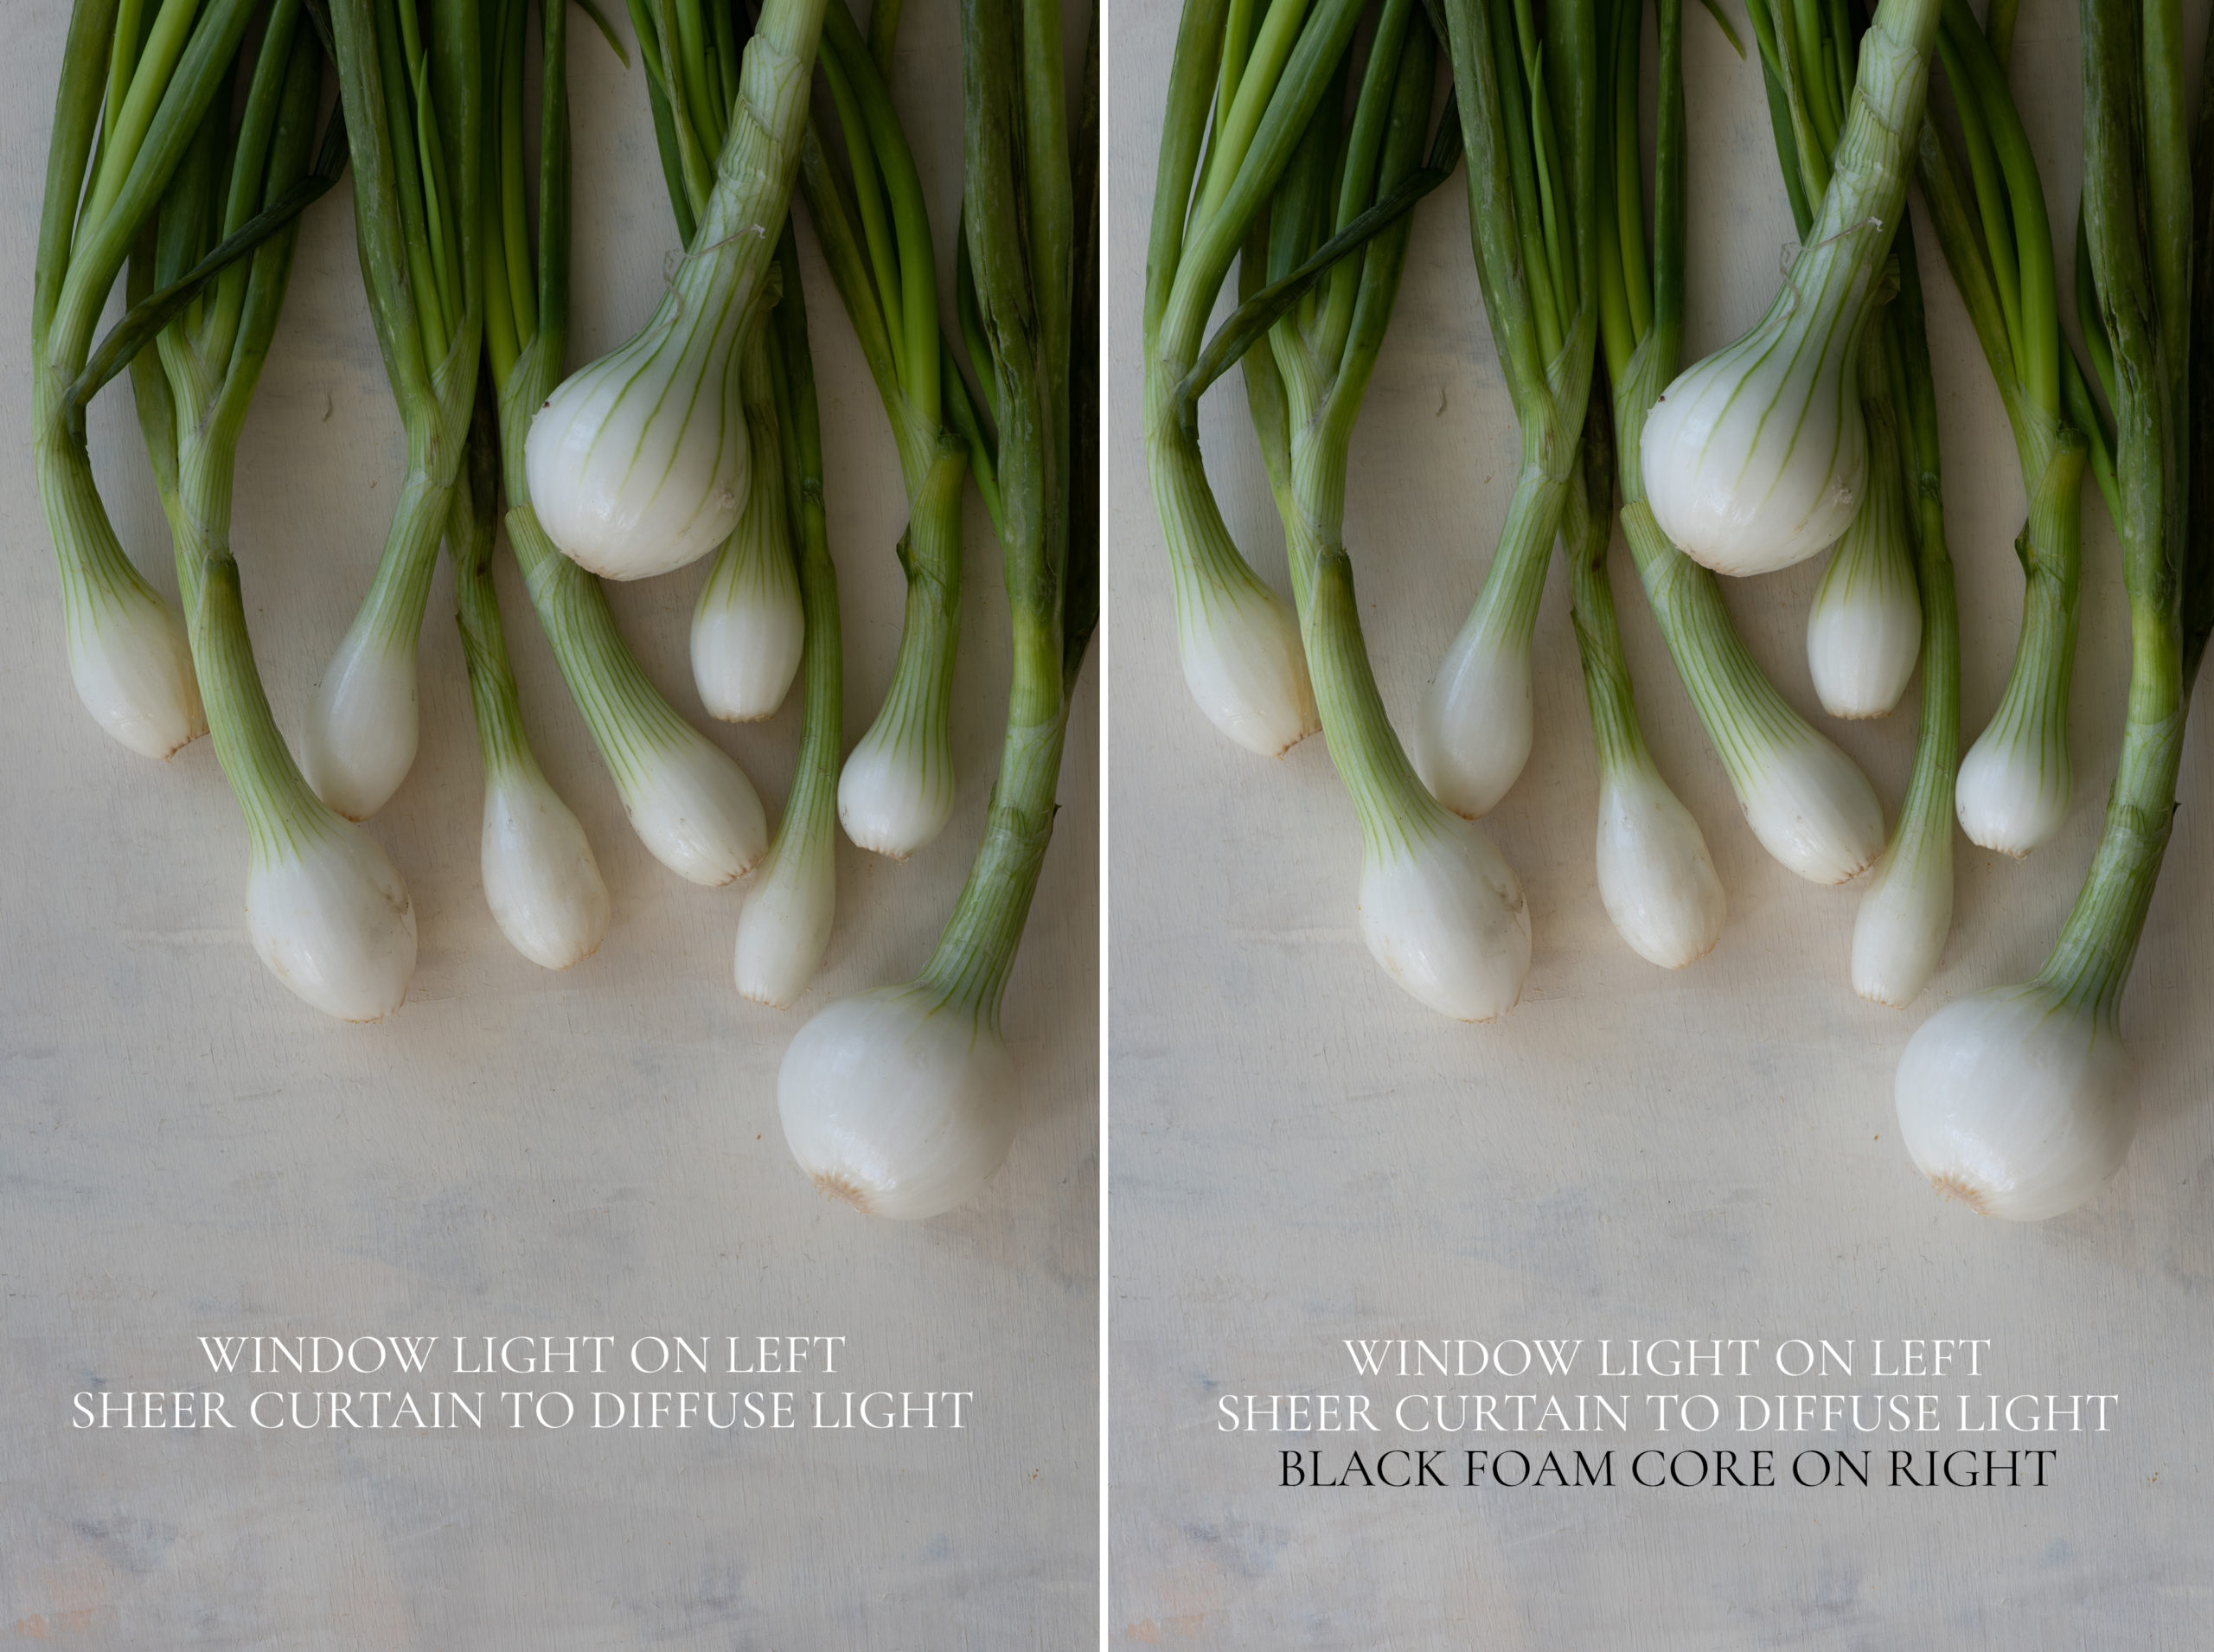 NATURAL LIGHT FOOD PHOTOGRAPHY TIPS